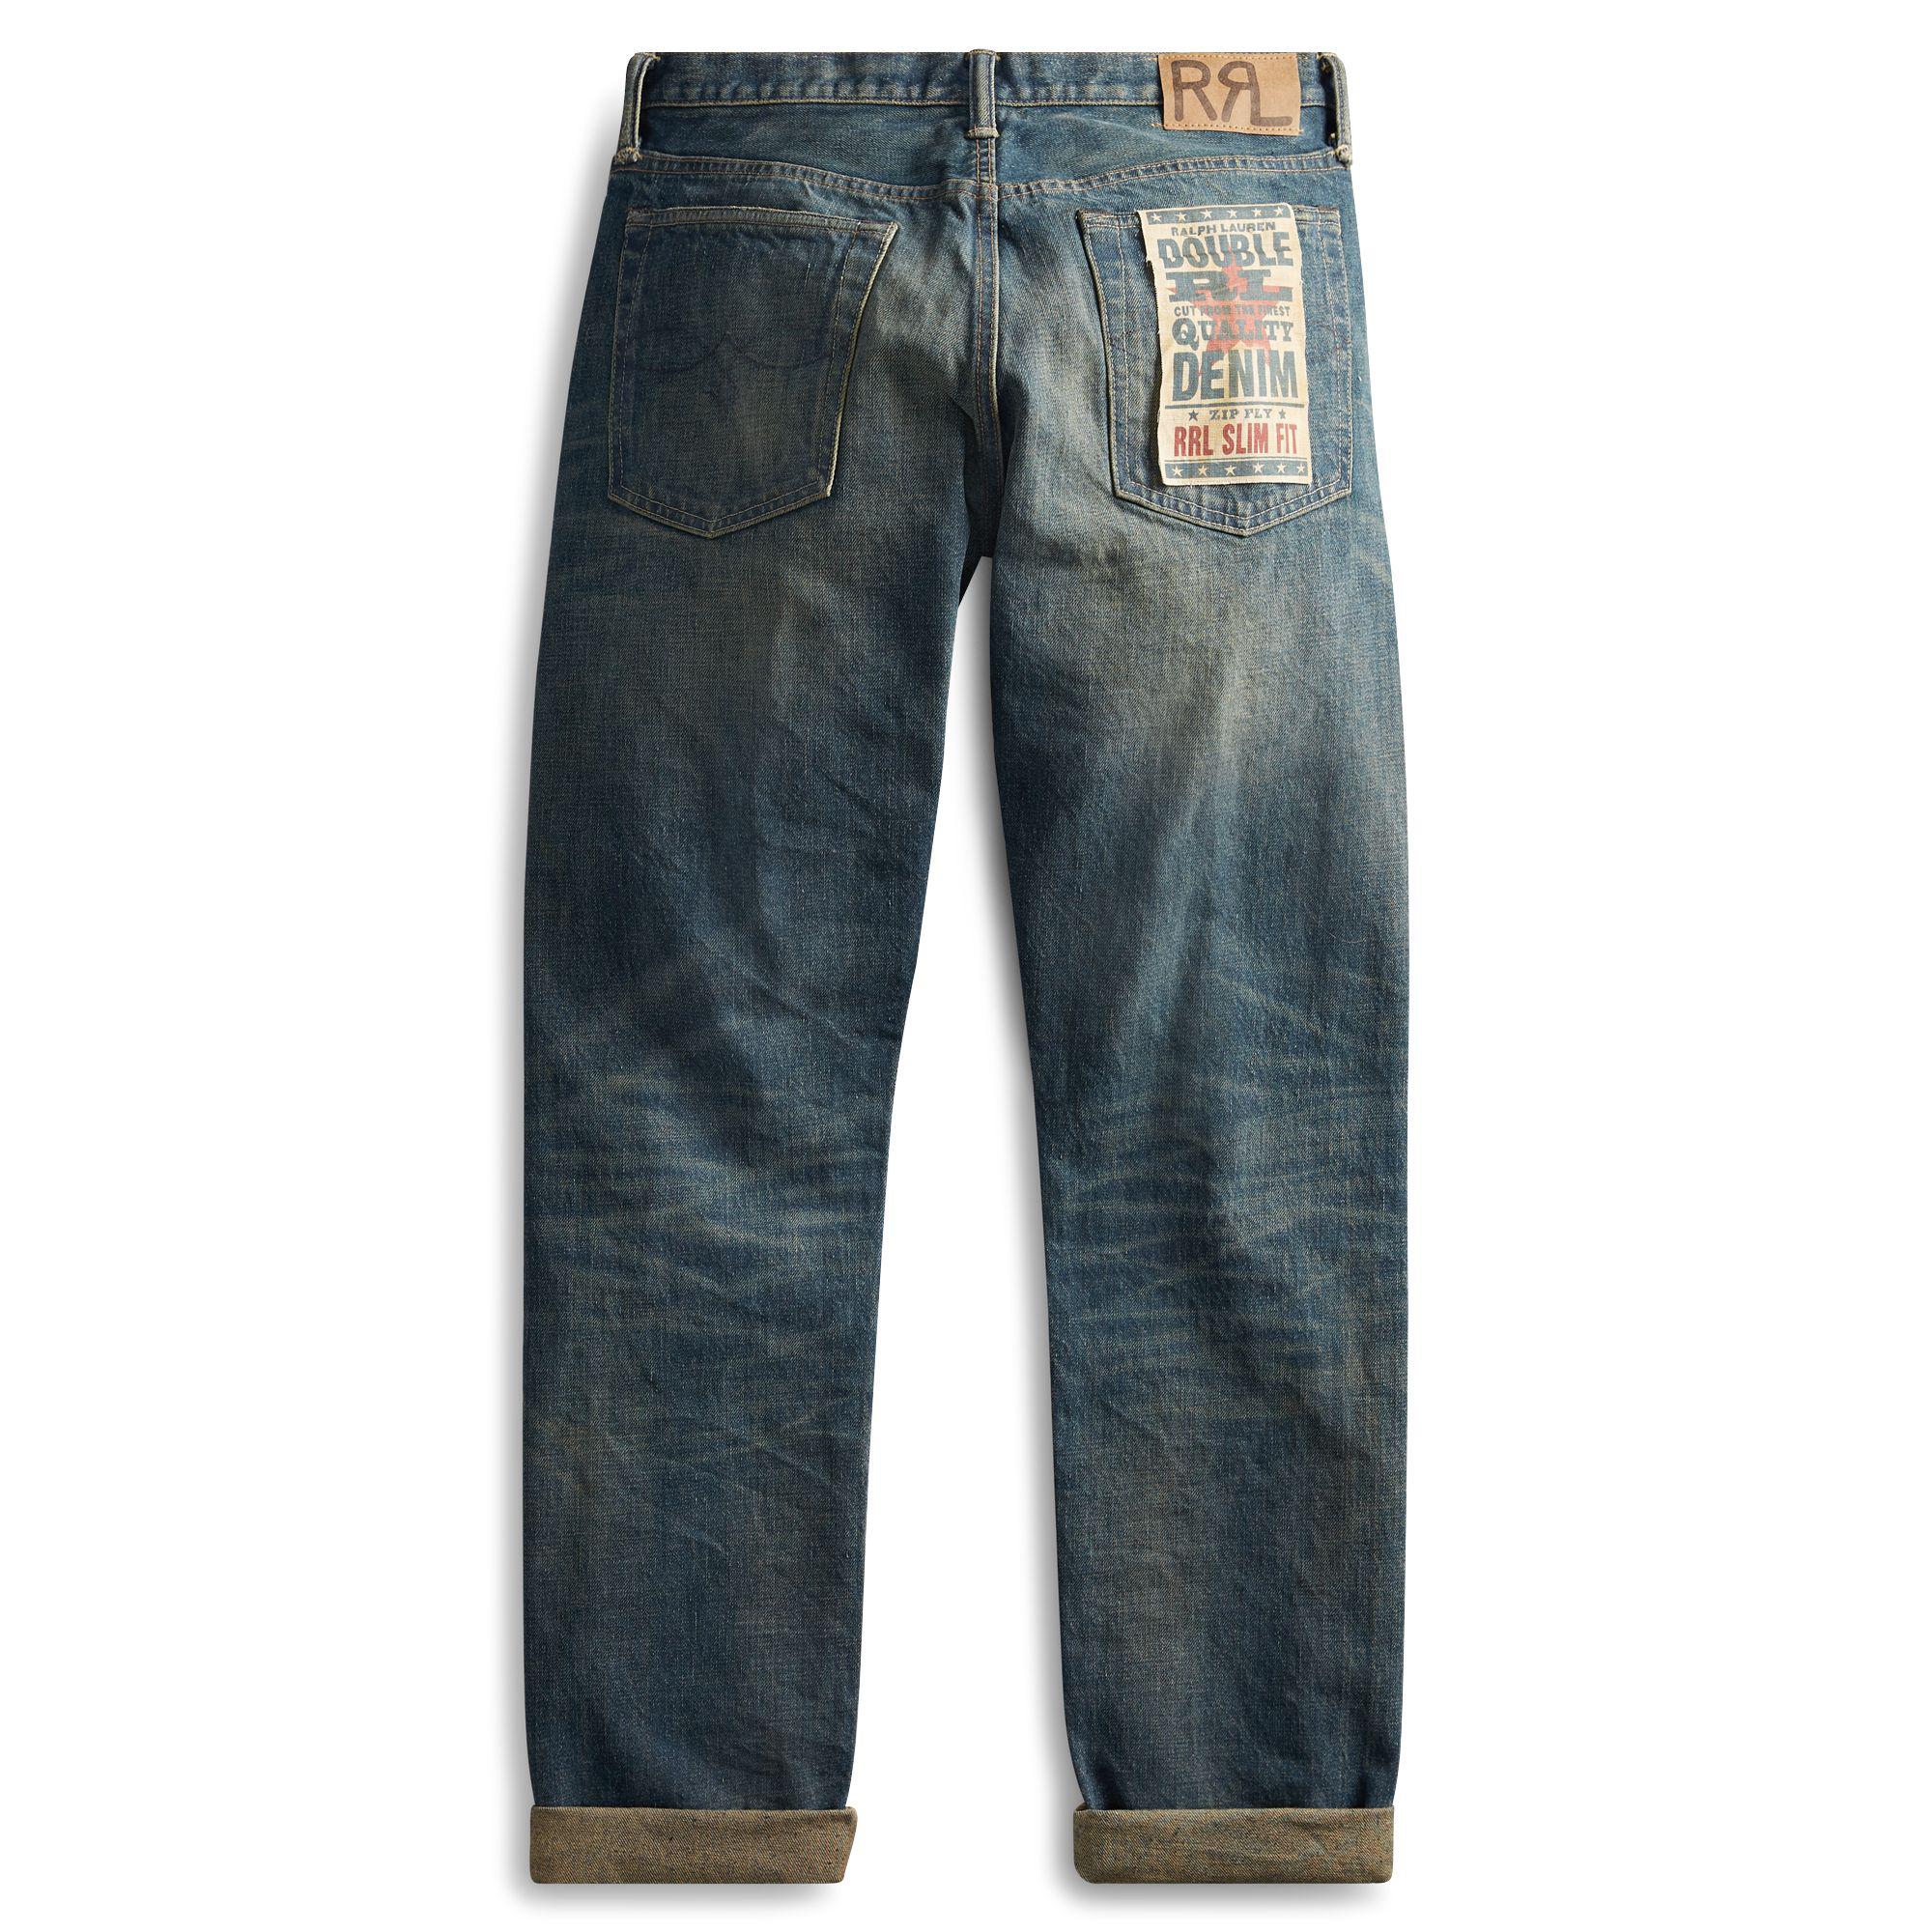 RRL Denim Slim Fit Jean in Blue for Men - Lyst